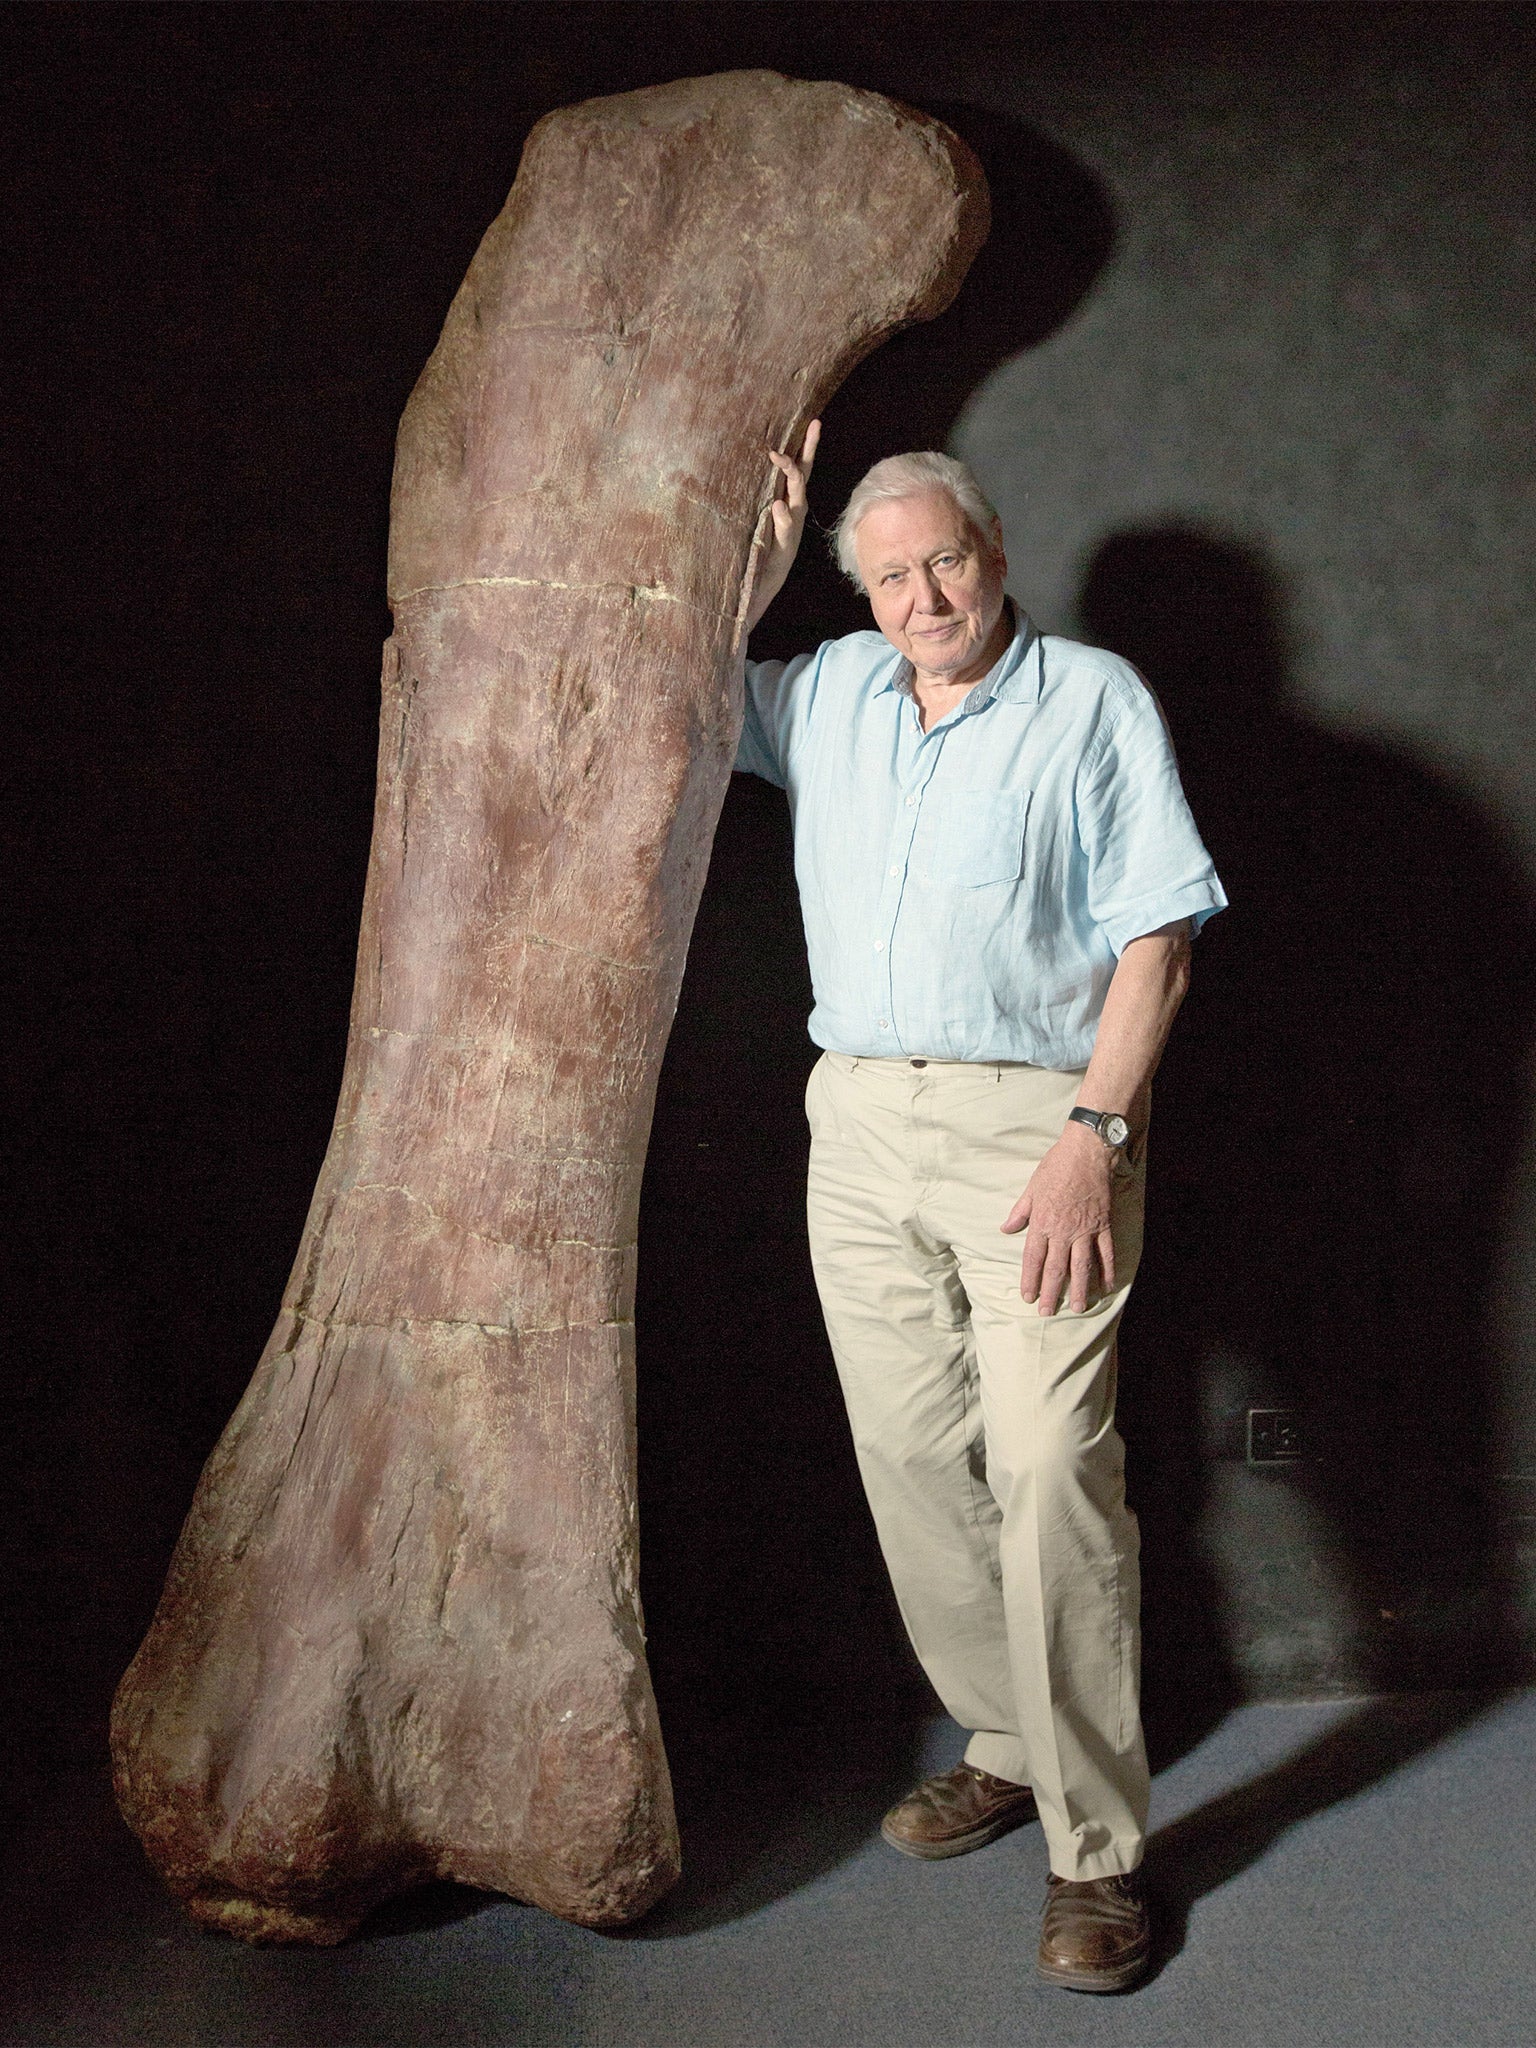 David Attenborough beside a giant thigh bone fossil replica